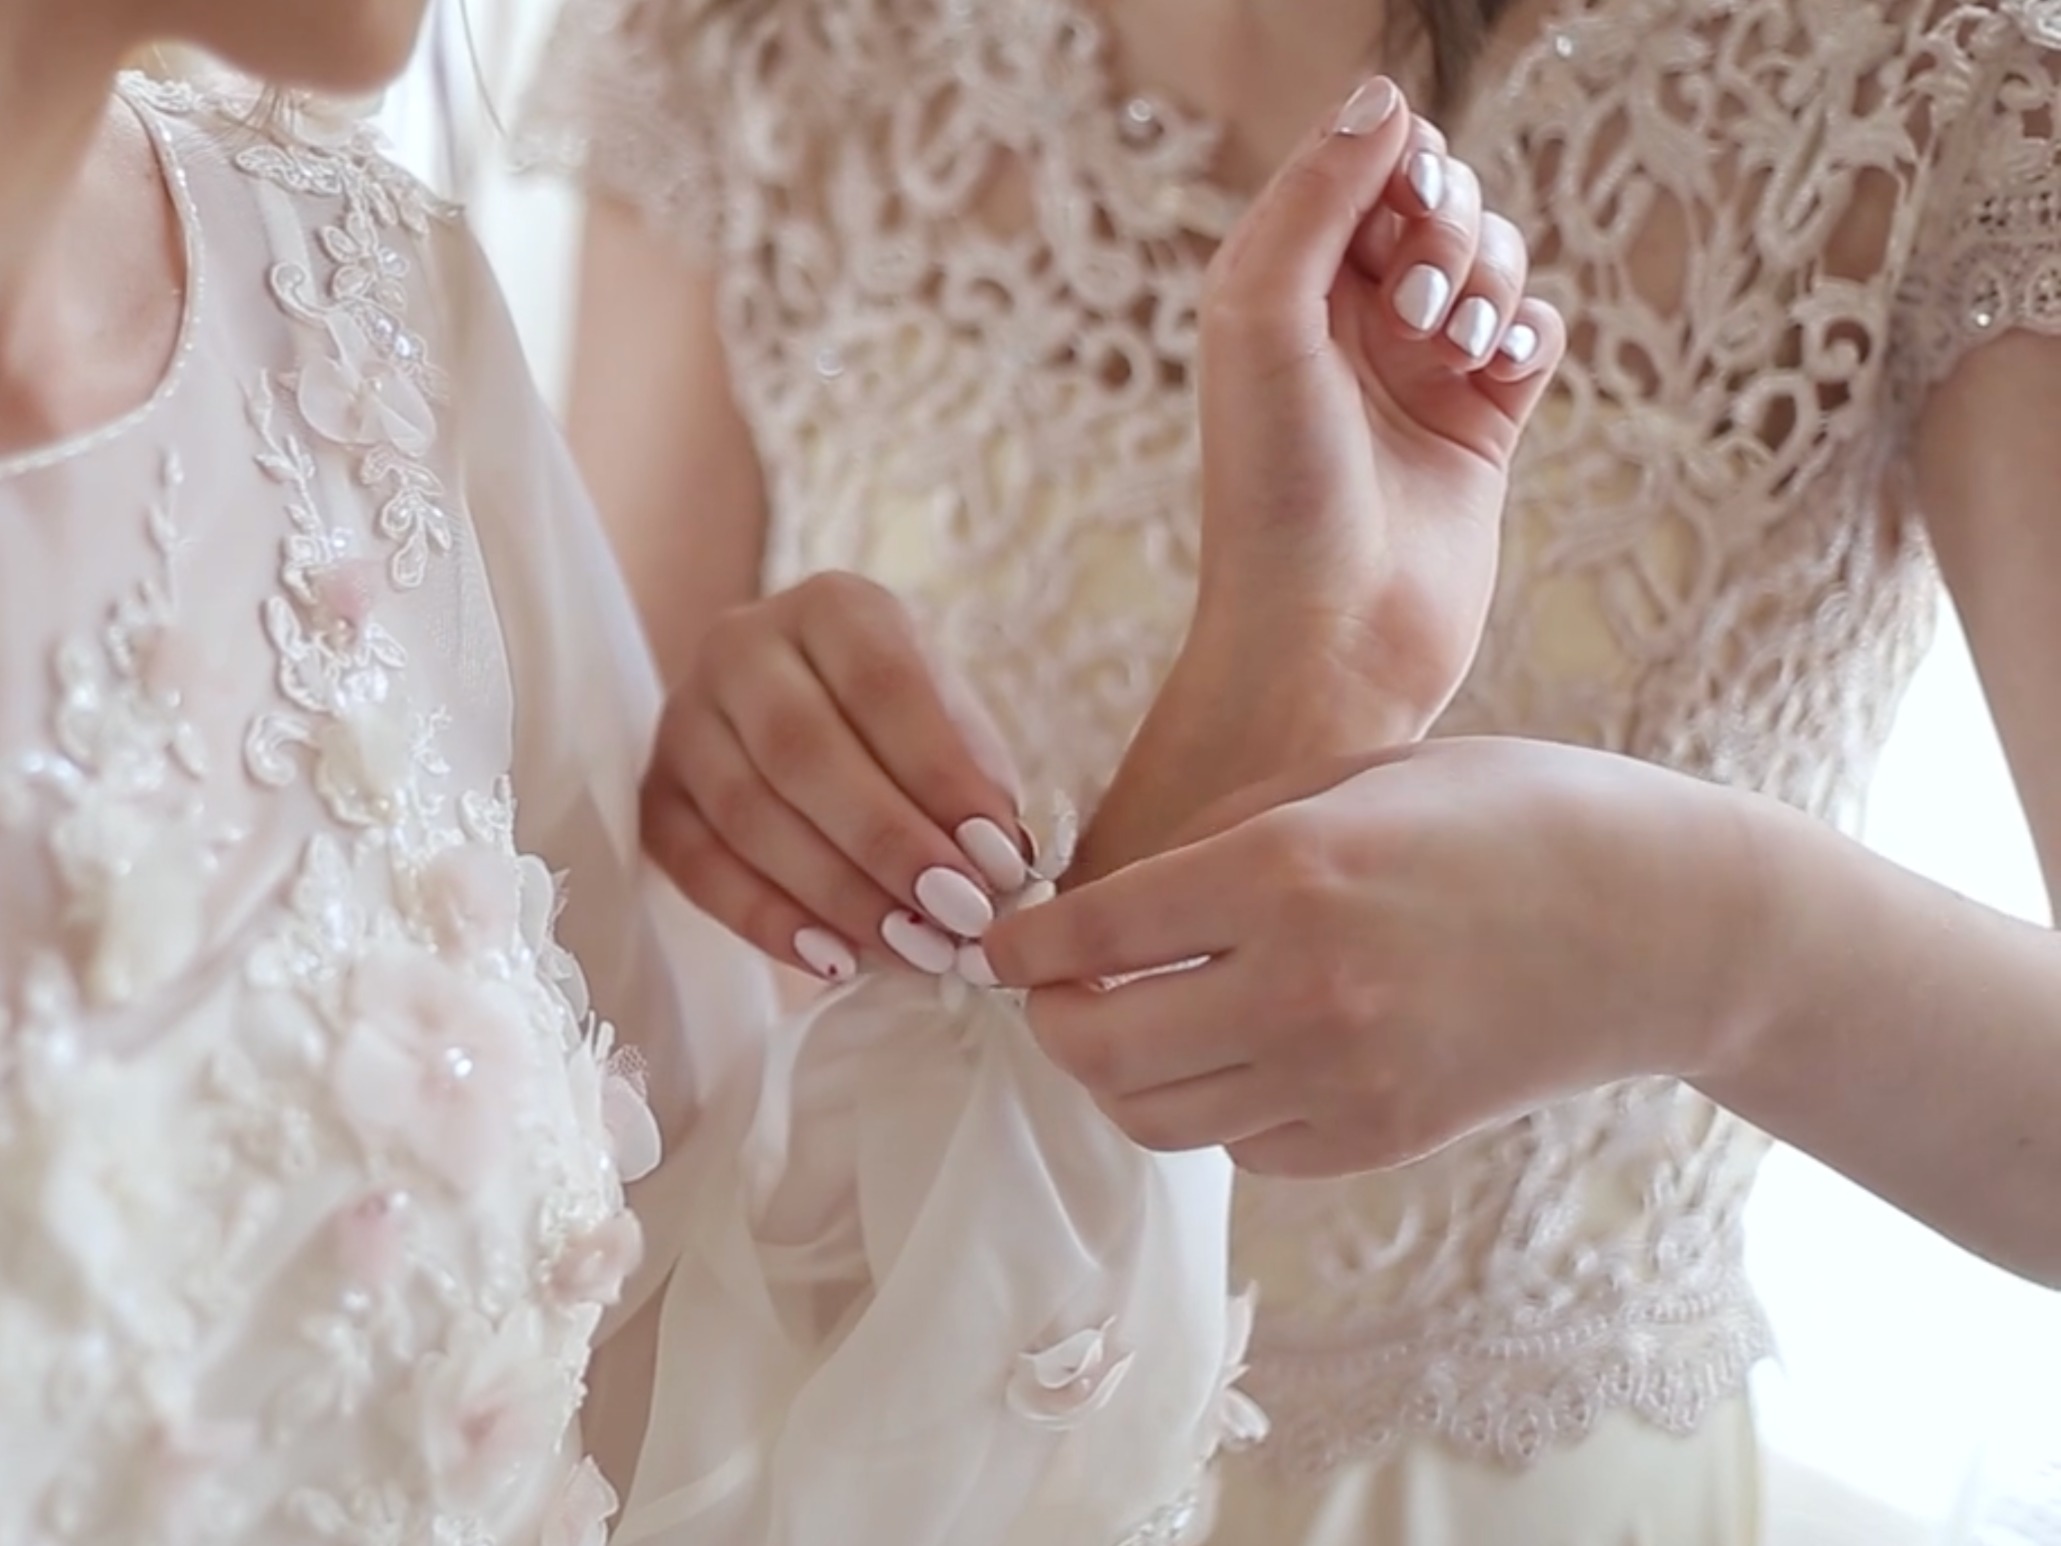 9. "Bridesmaid Nail Designs for Every Wedding Season" - wide 6